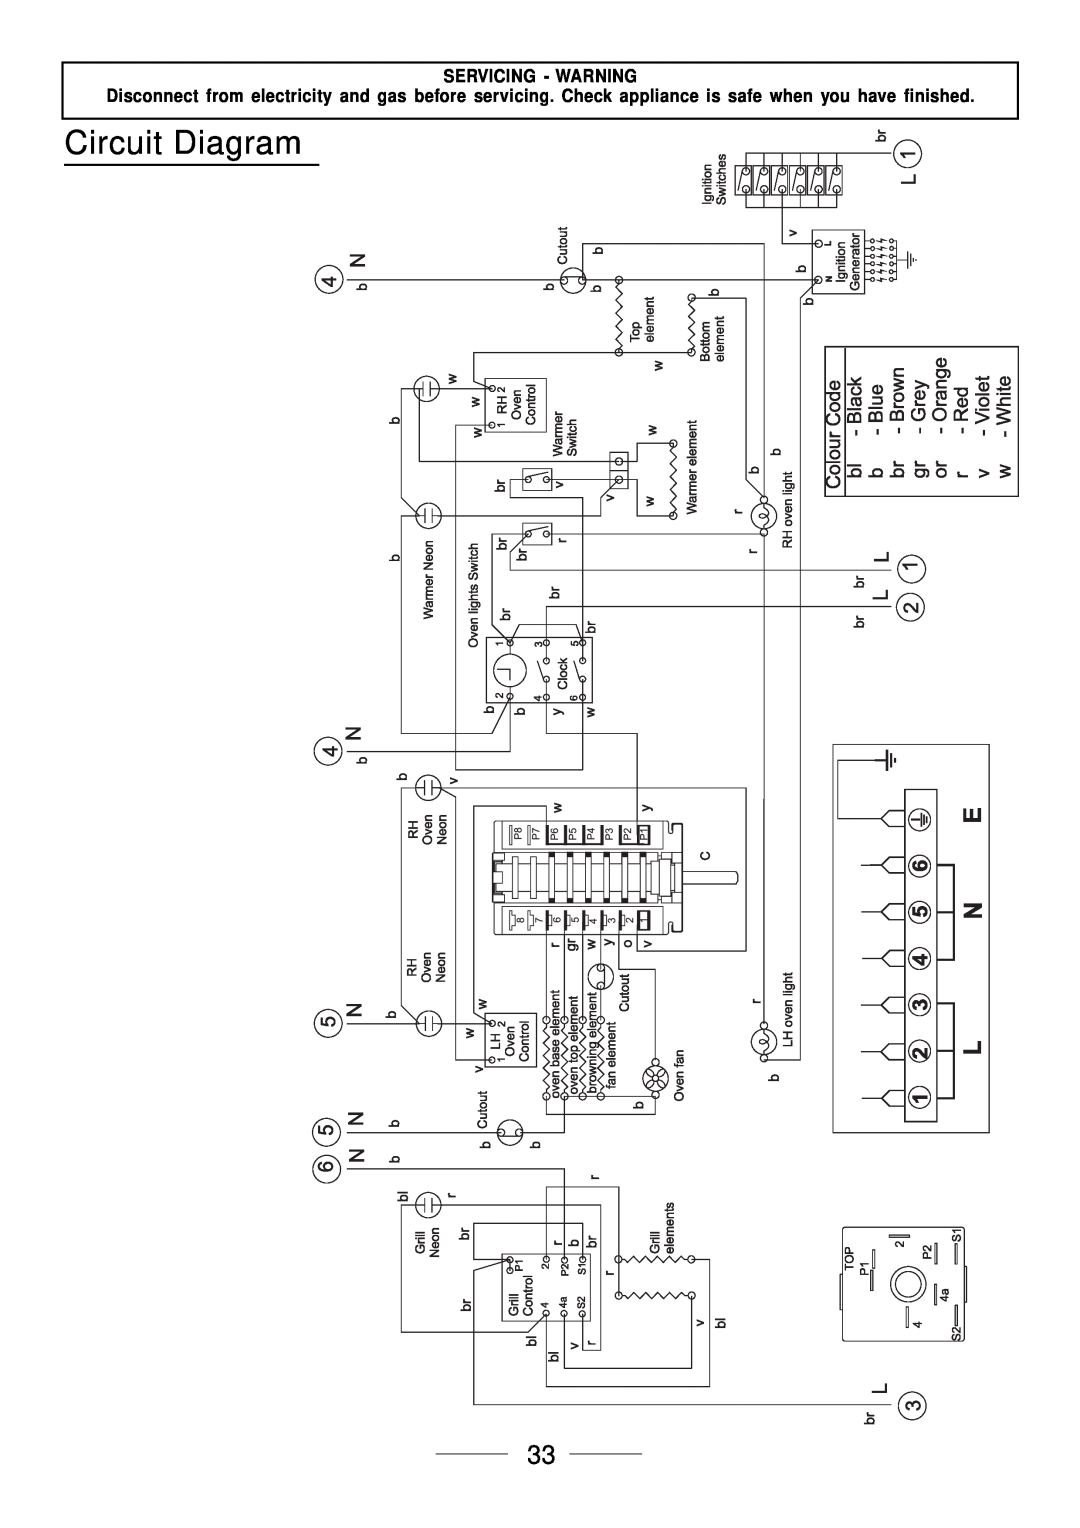 Maytag 110 installation instructions Circuit Diagram, Servicing - Warning 